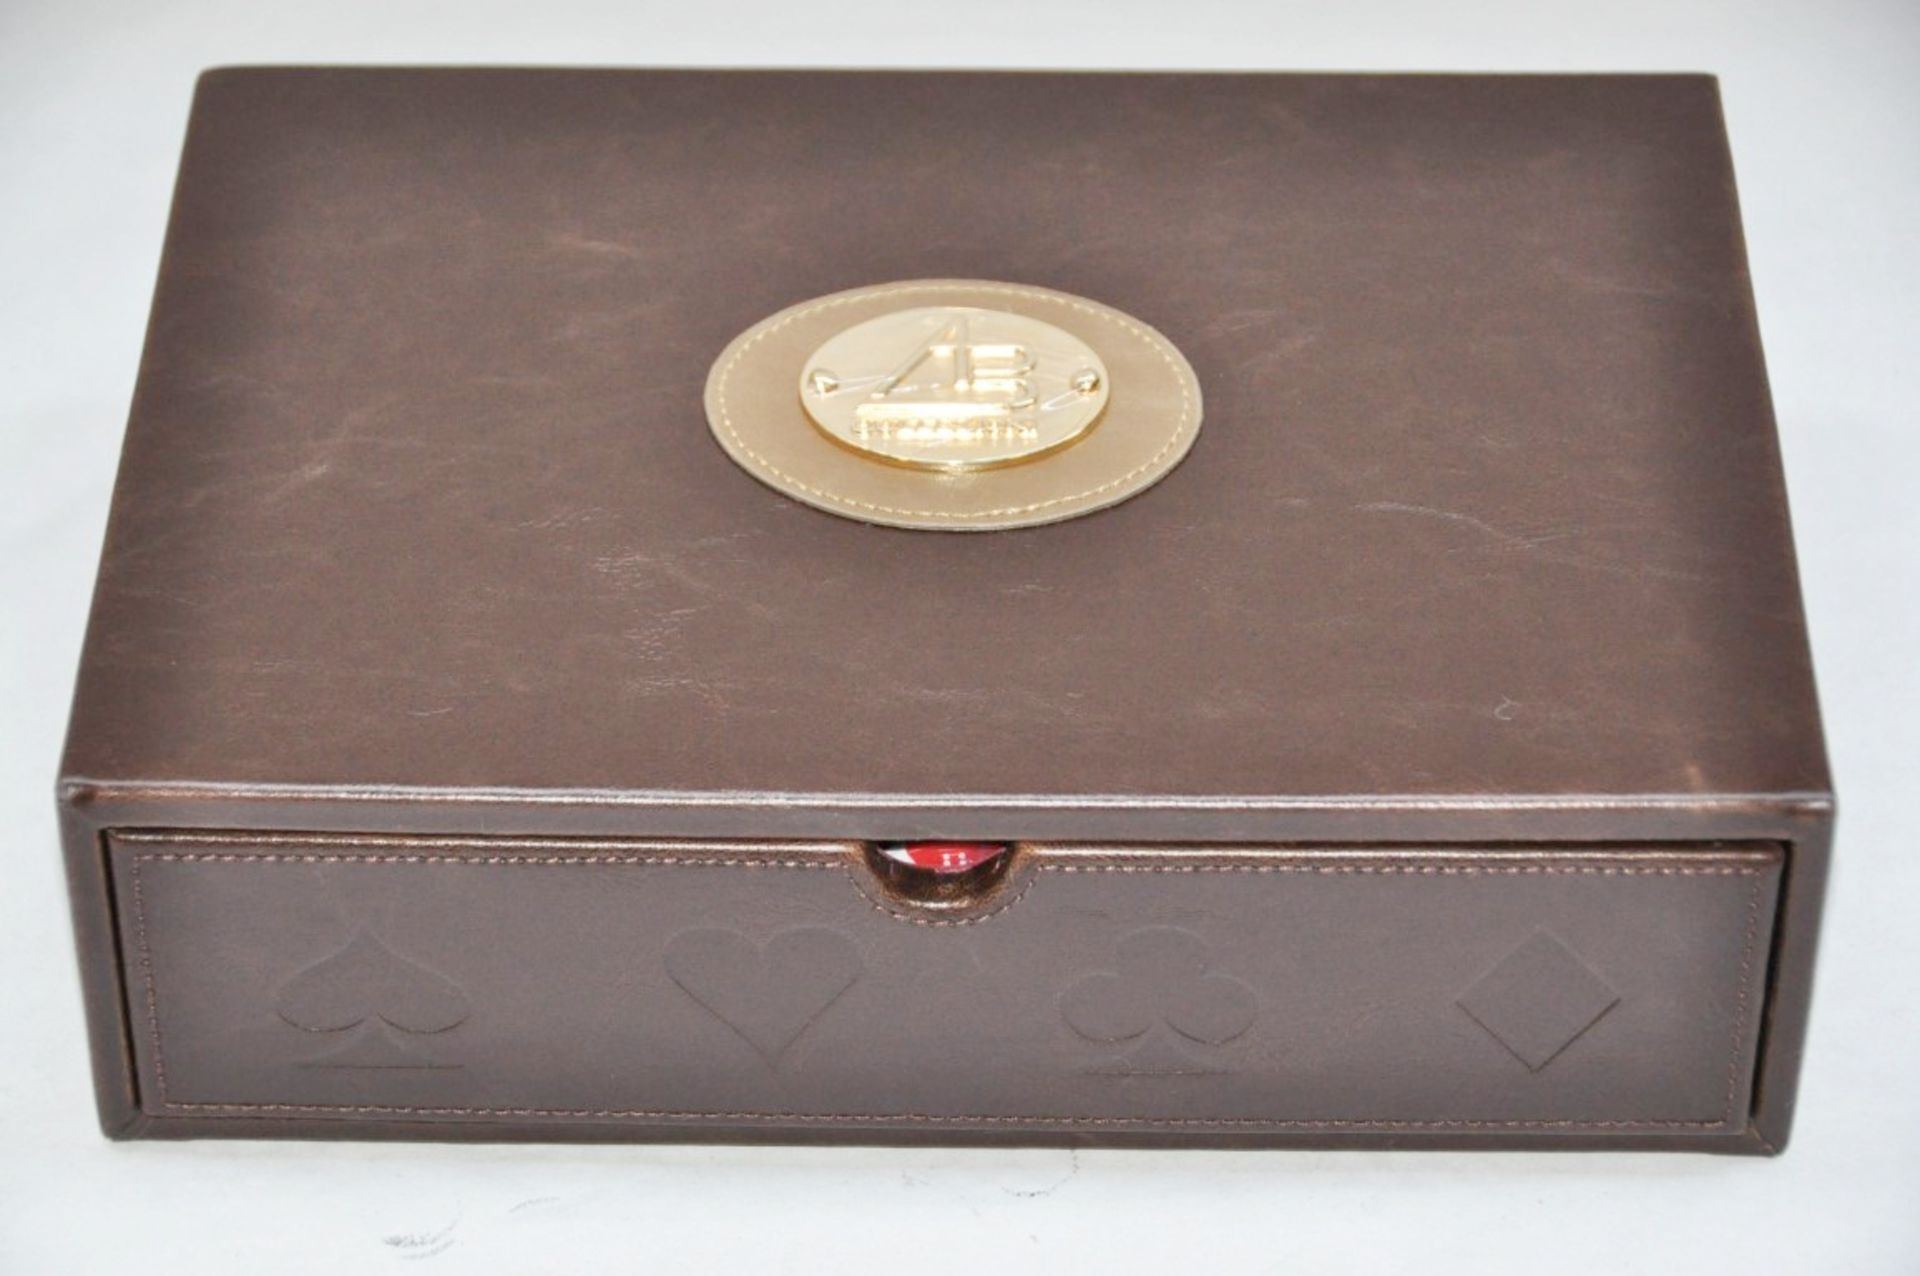 1 x "AB Collezioni" Italian Genuine Leather-Bound Luxury POKER SET (34048) - Features Beautiful - Image 3 of 8